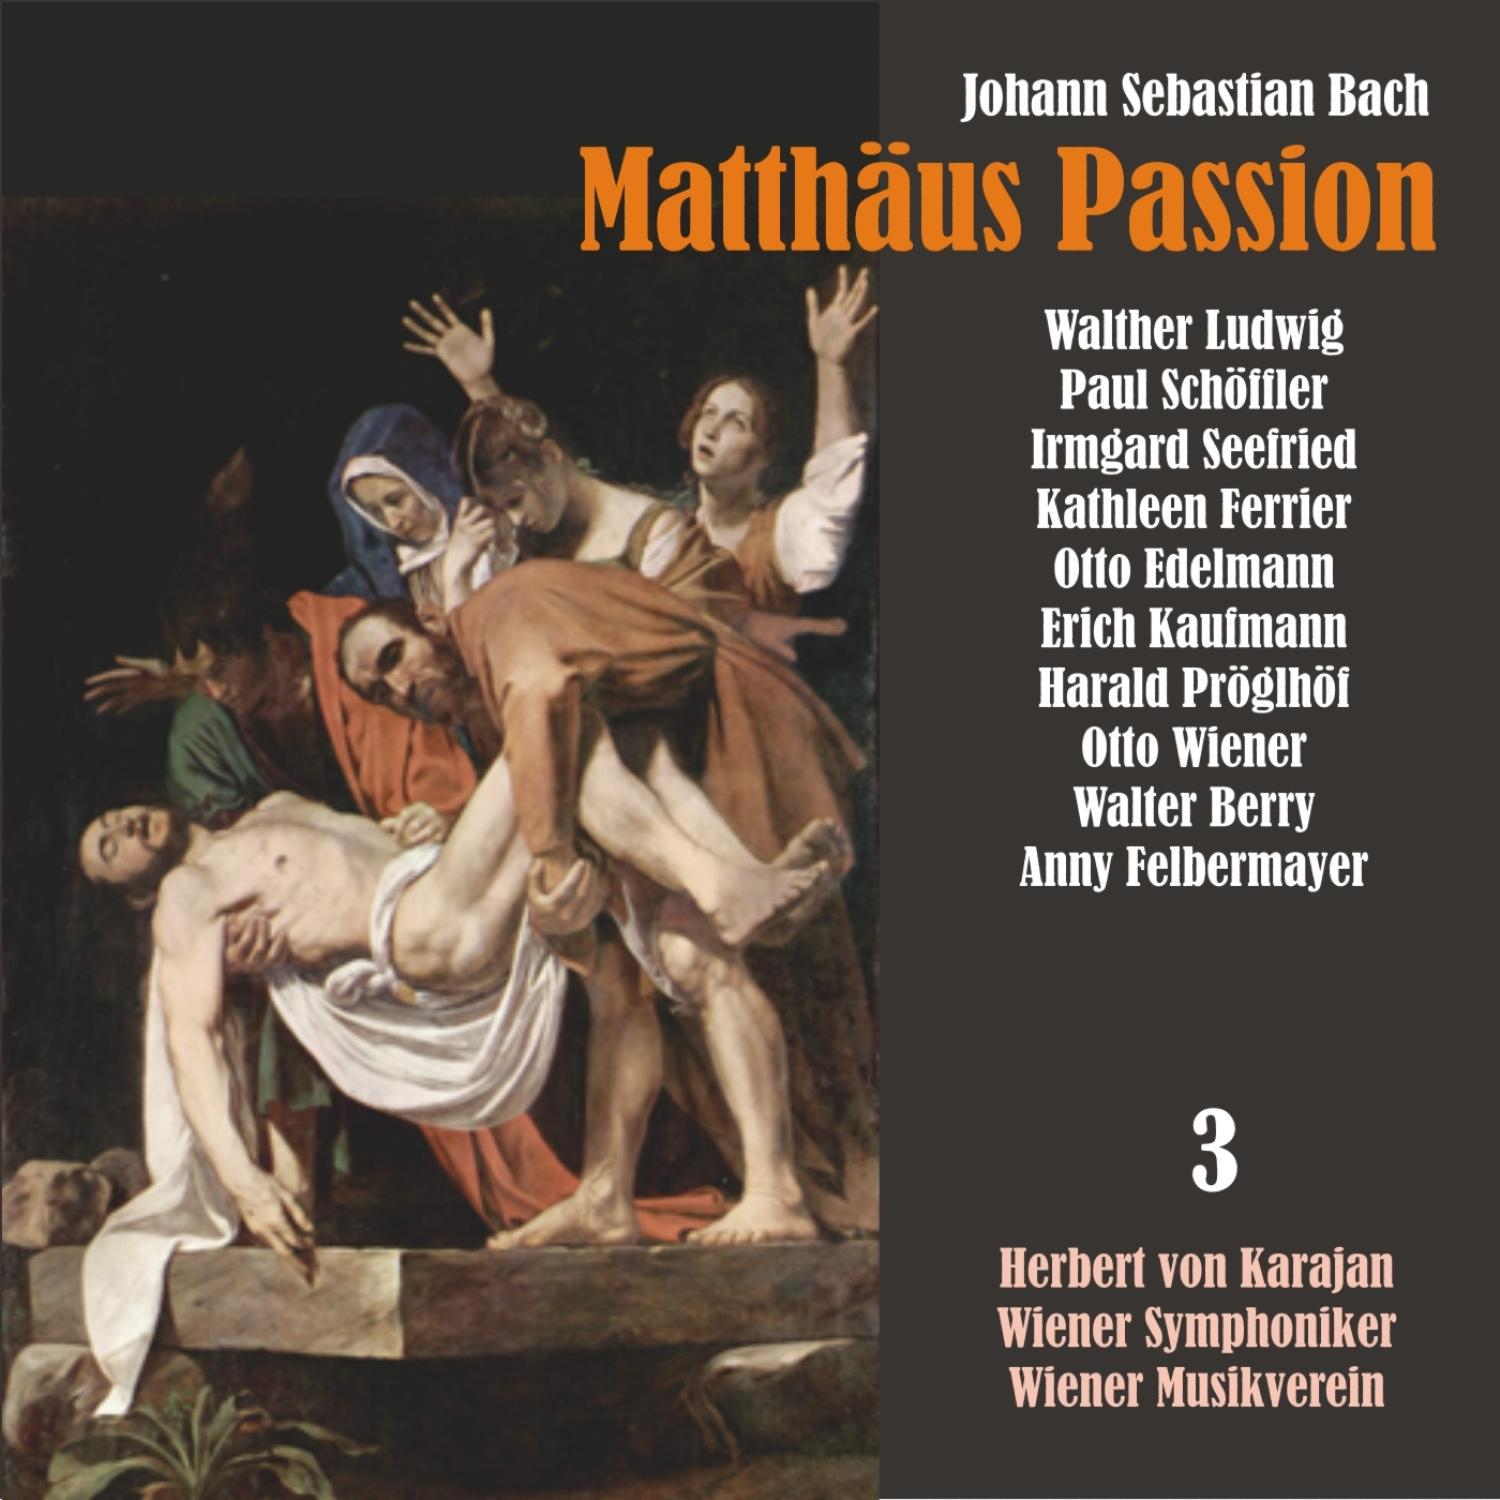 Matth us Passion, BWV 244: " Konnen Tranen meiner Wangen"